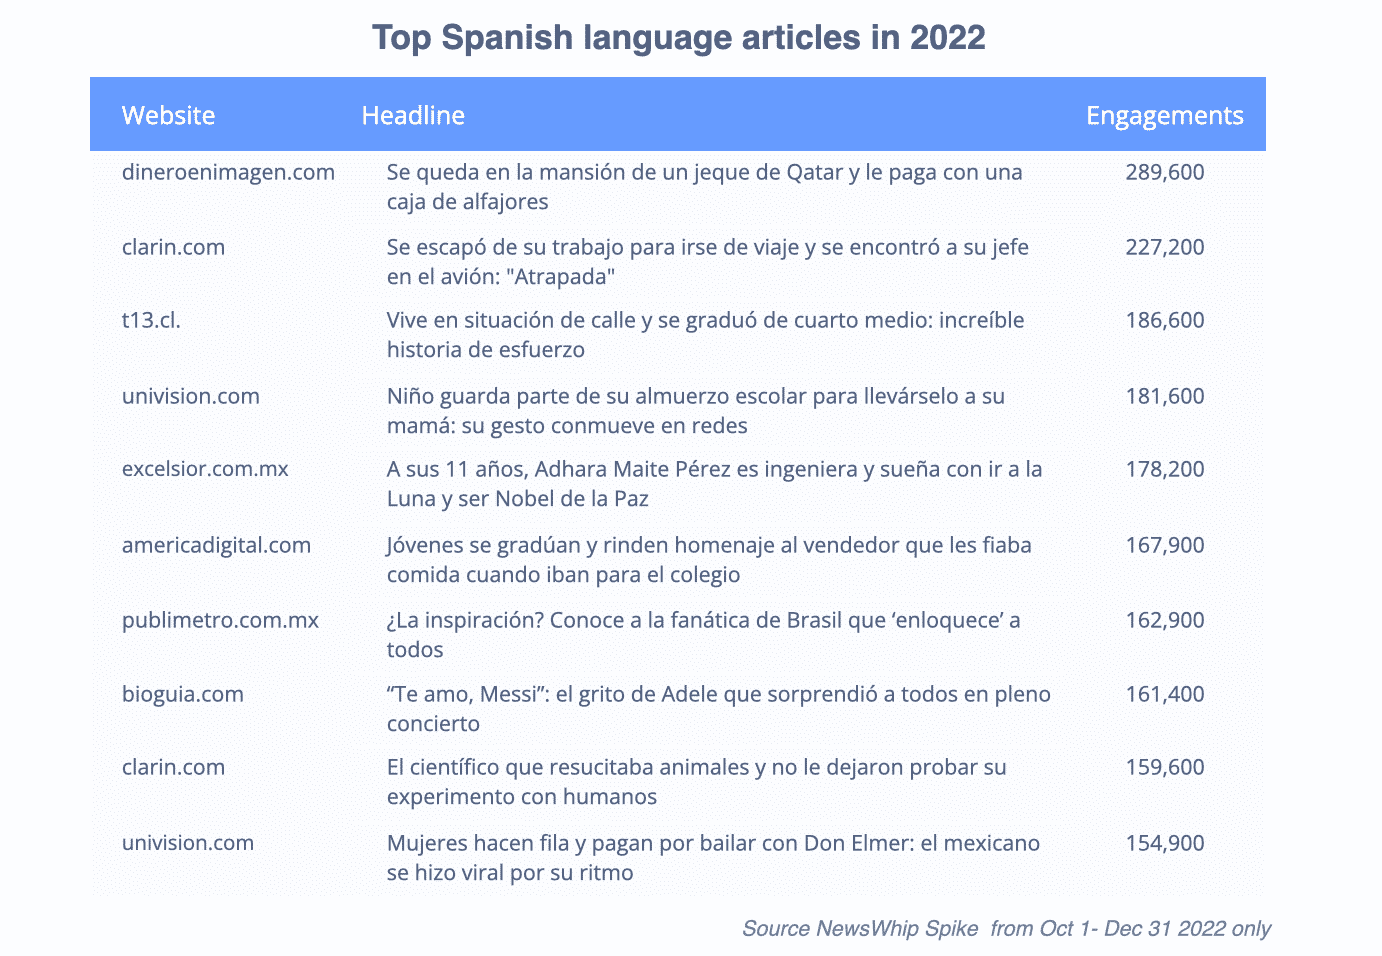 The top Spanish-language articles in Q4 2022